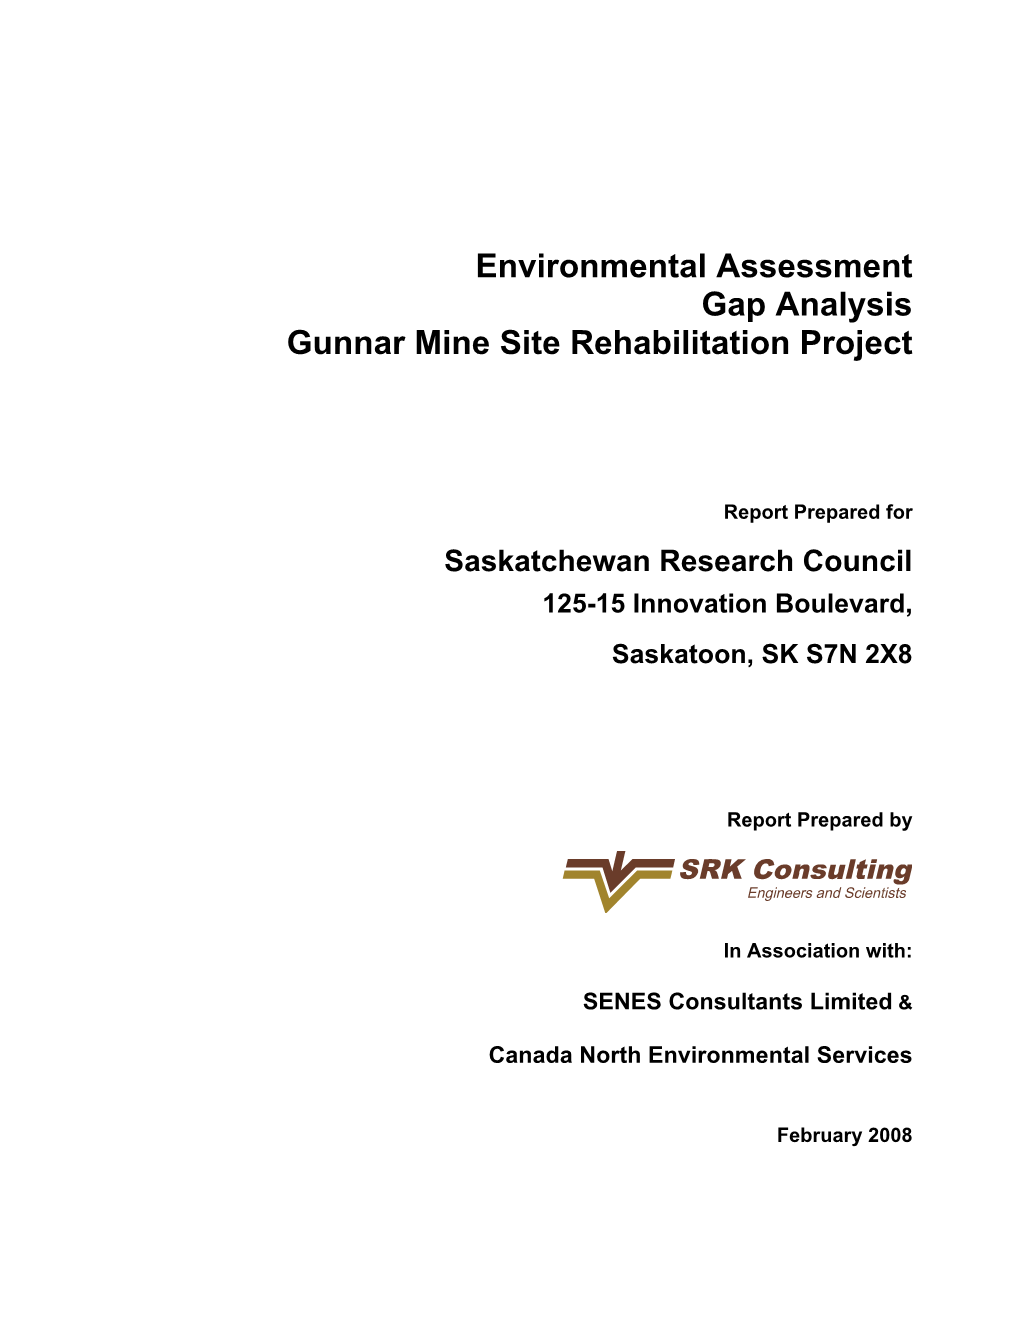 Gunnar Environmental Assessment Gap Analysis